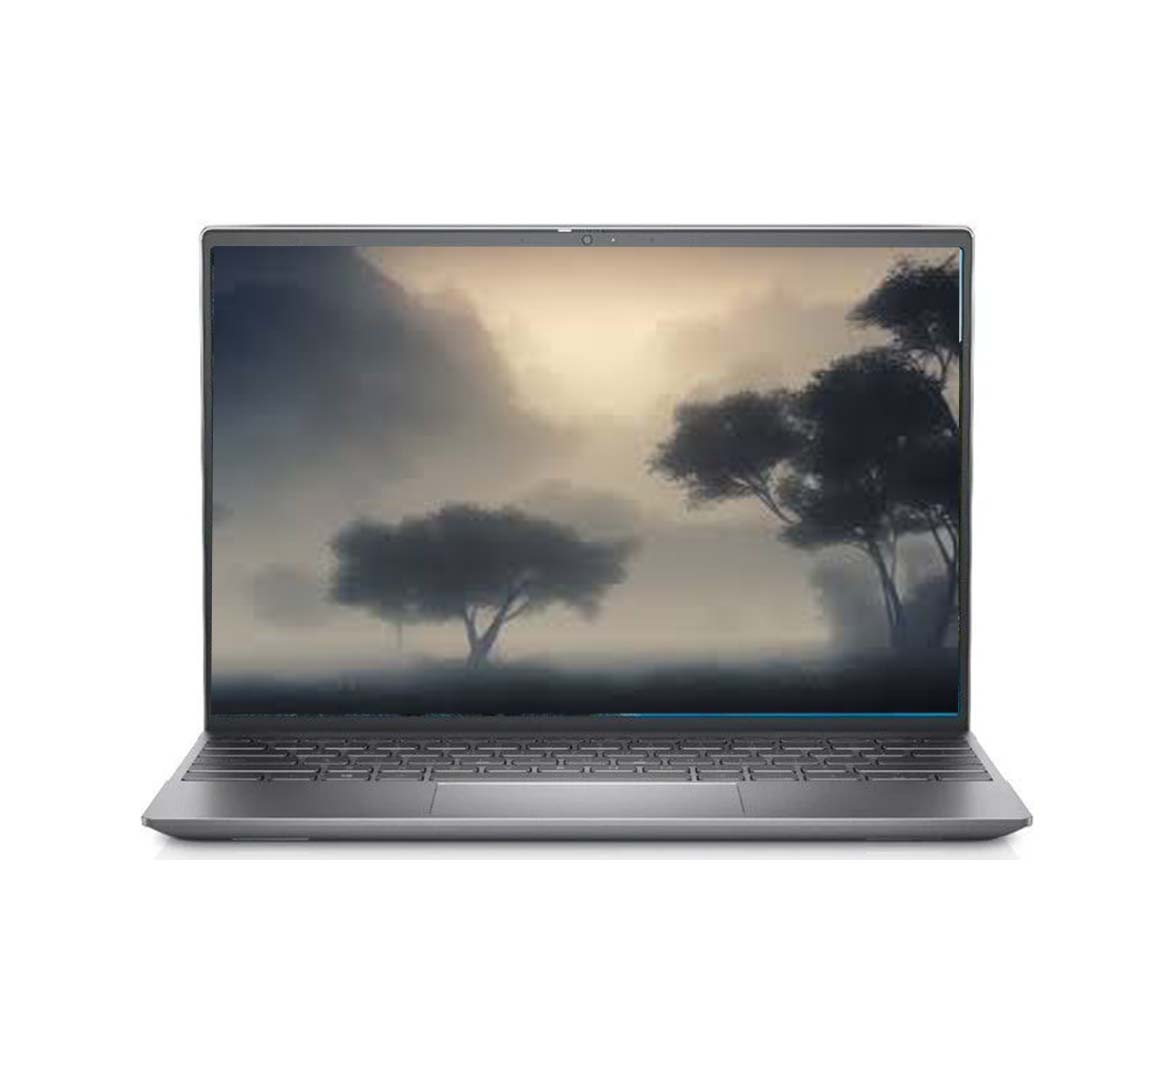 Dell Inspiron 13 5310 Business Laptop, Intel Core i5-11th Generation CPU, 8GB RAM, 256GB SSD , 13.5 inch Display, Windows 10 Pro, Refurbished Laptop